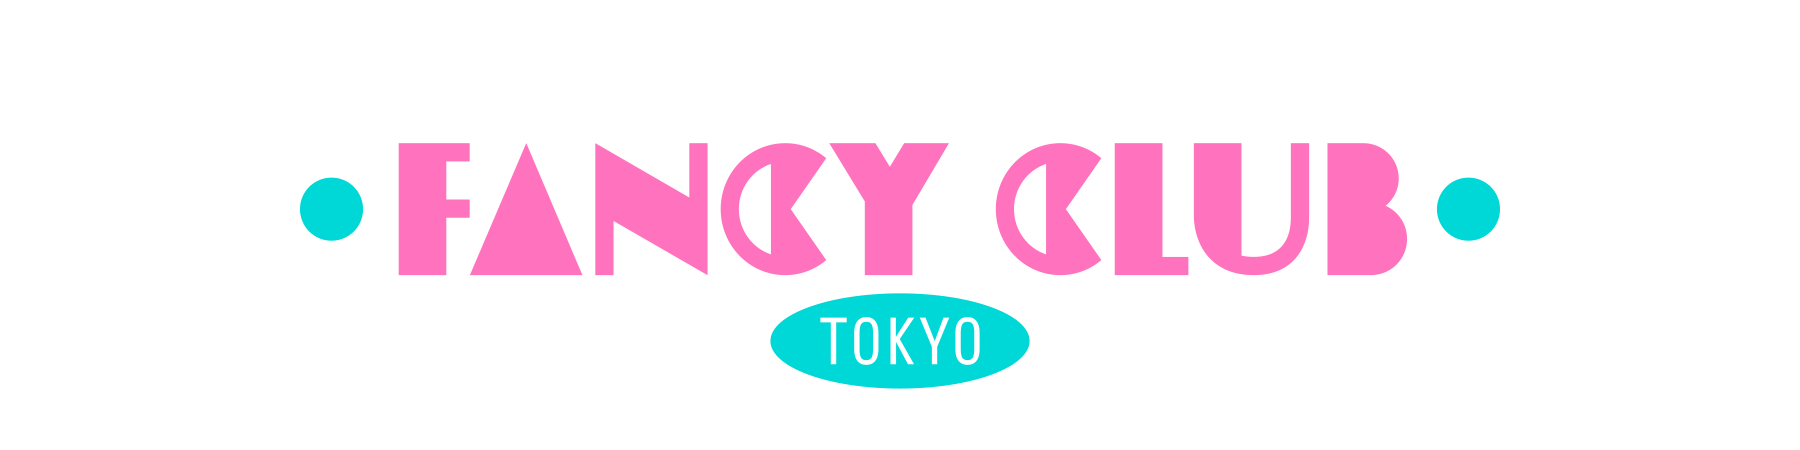 FANCY CLUB TOKYO